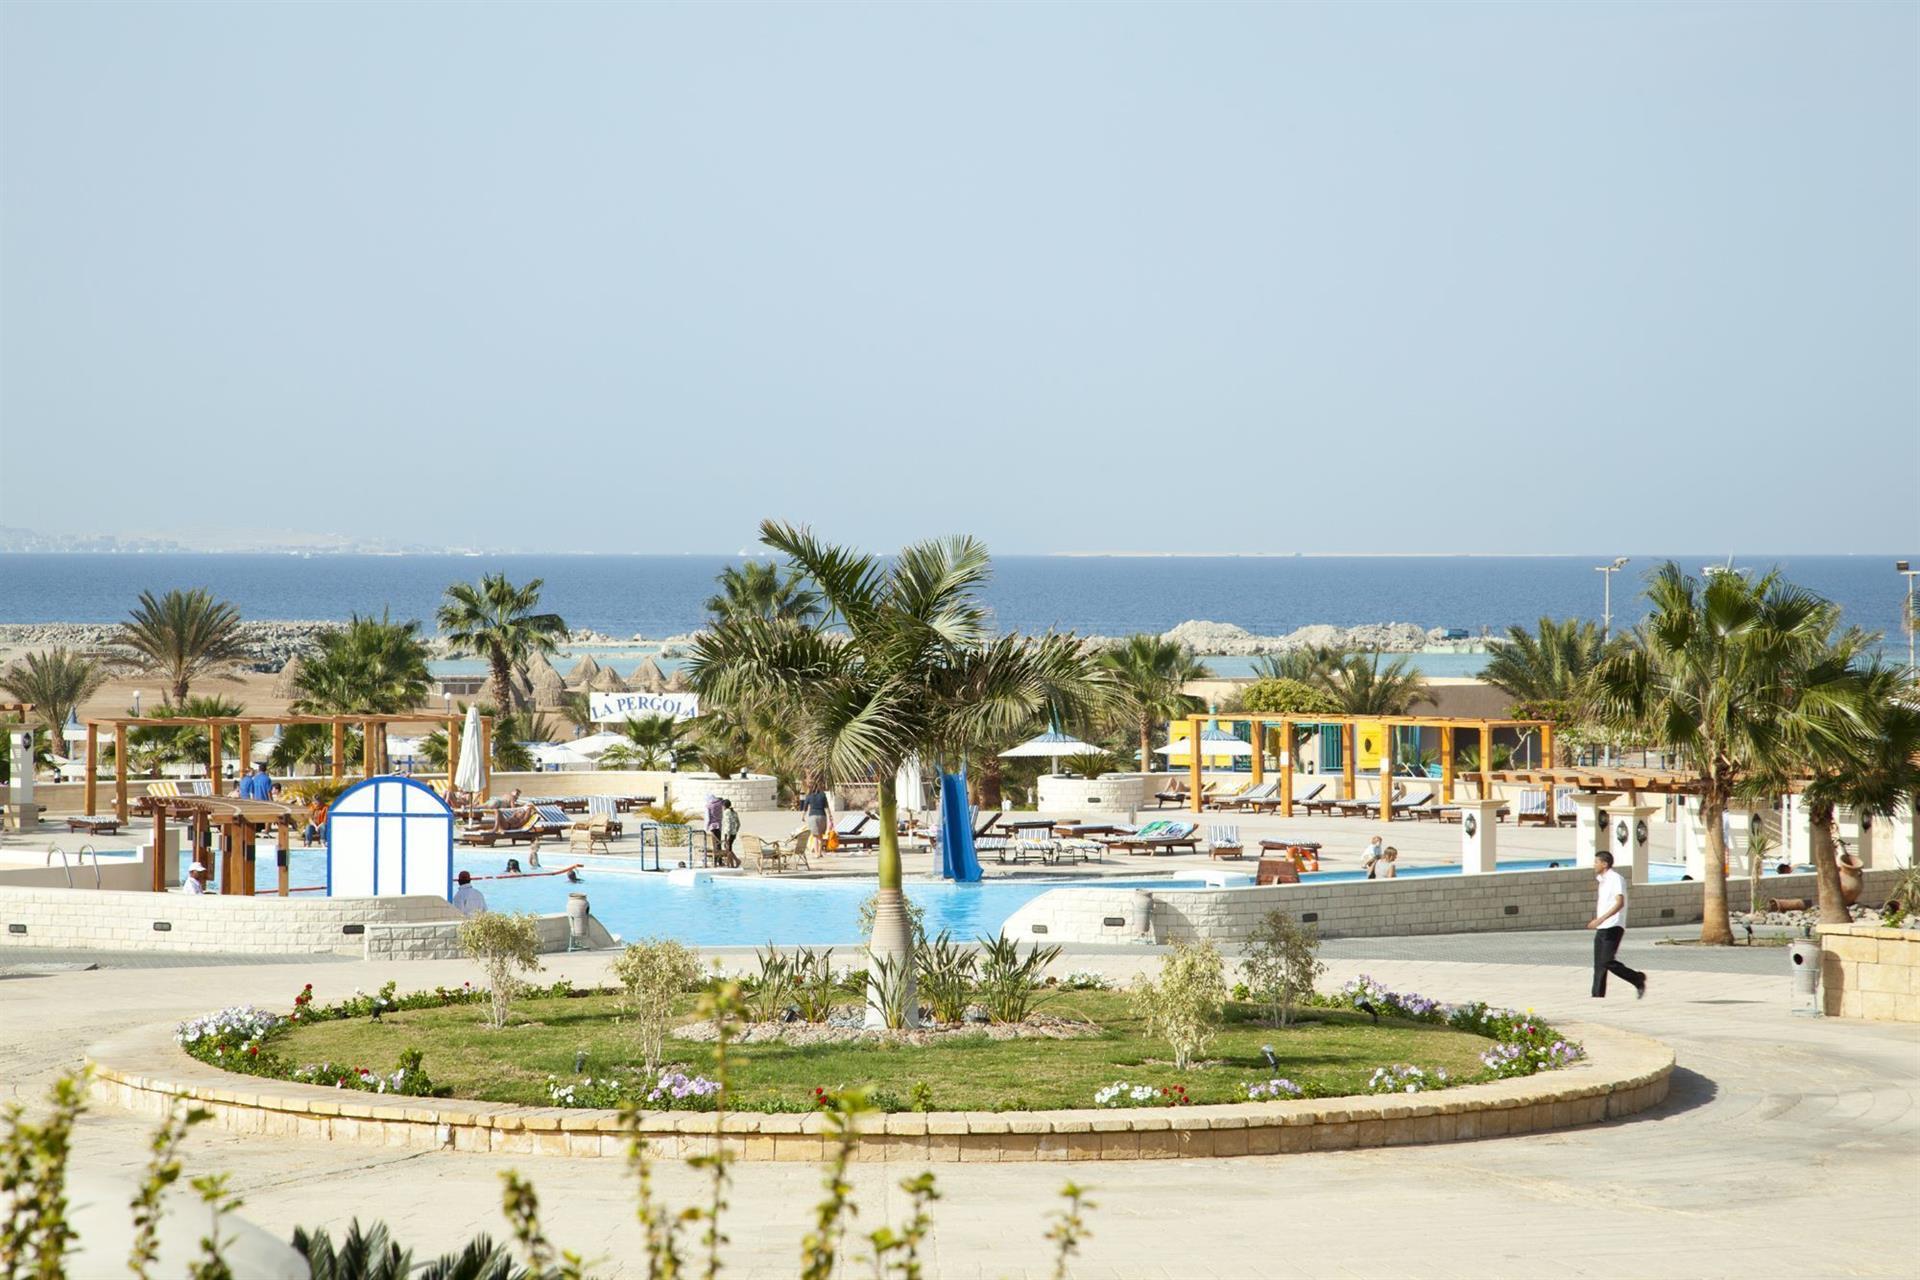 Coral beach rotana resort. Coral Beach Rotana Resort 4 Египет Хургада. Отель Coral Beach Hotel Hurghada. Отель Корал Бич Хургада Египет. Отель Корал Бич ротана Резорт Хургада.